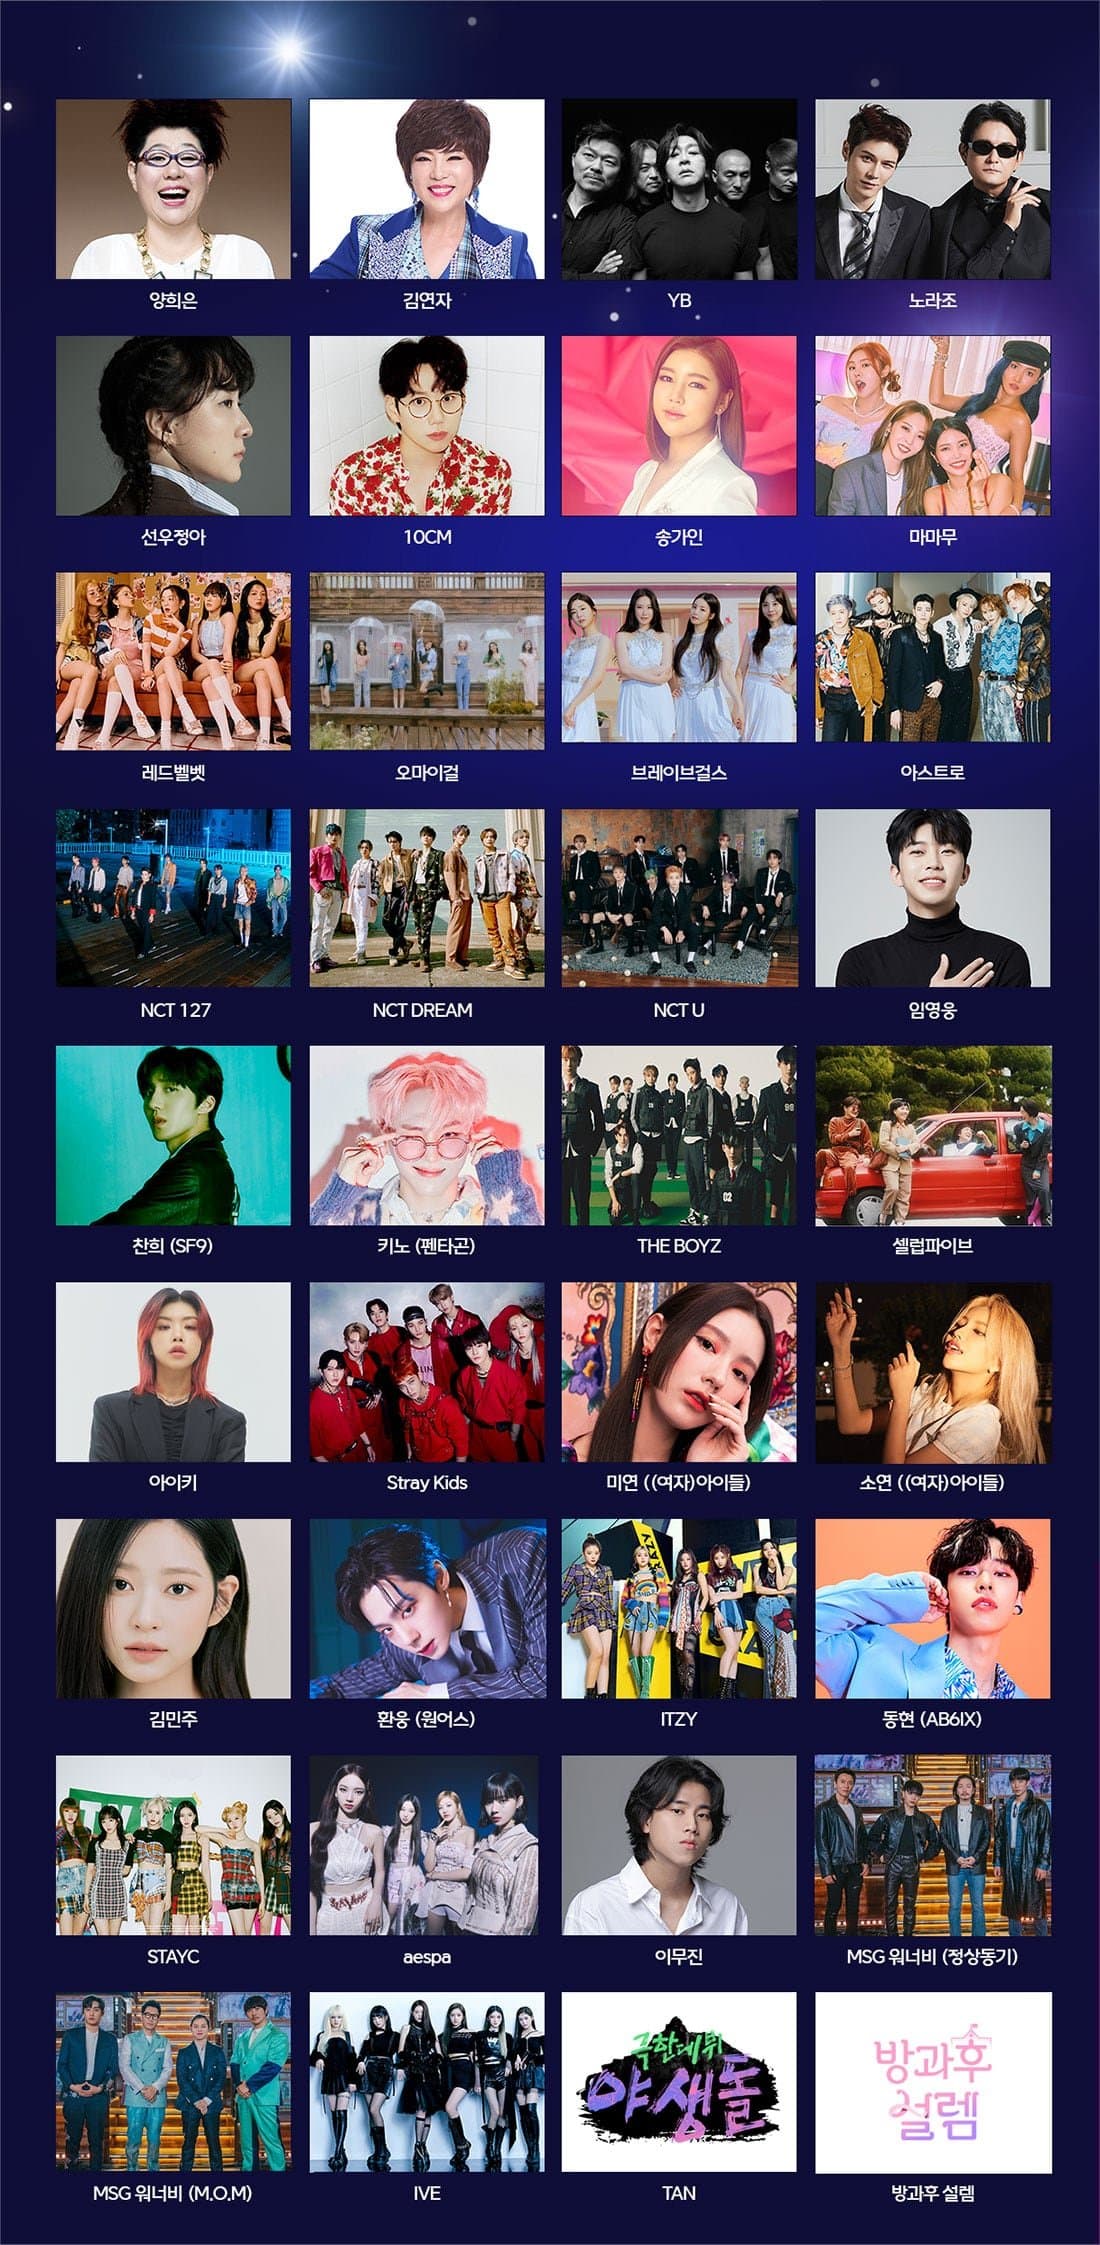 MBC Music Festival 2021 